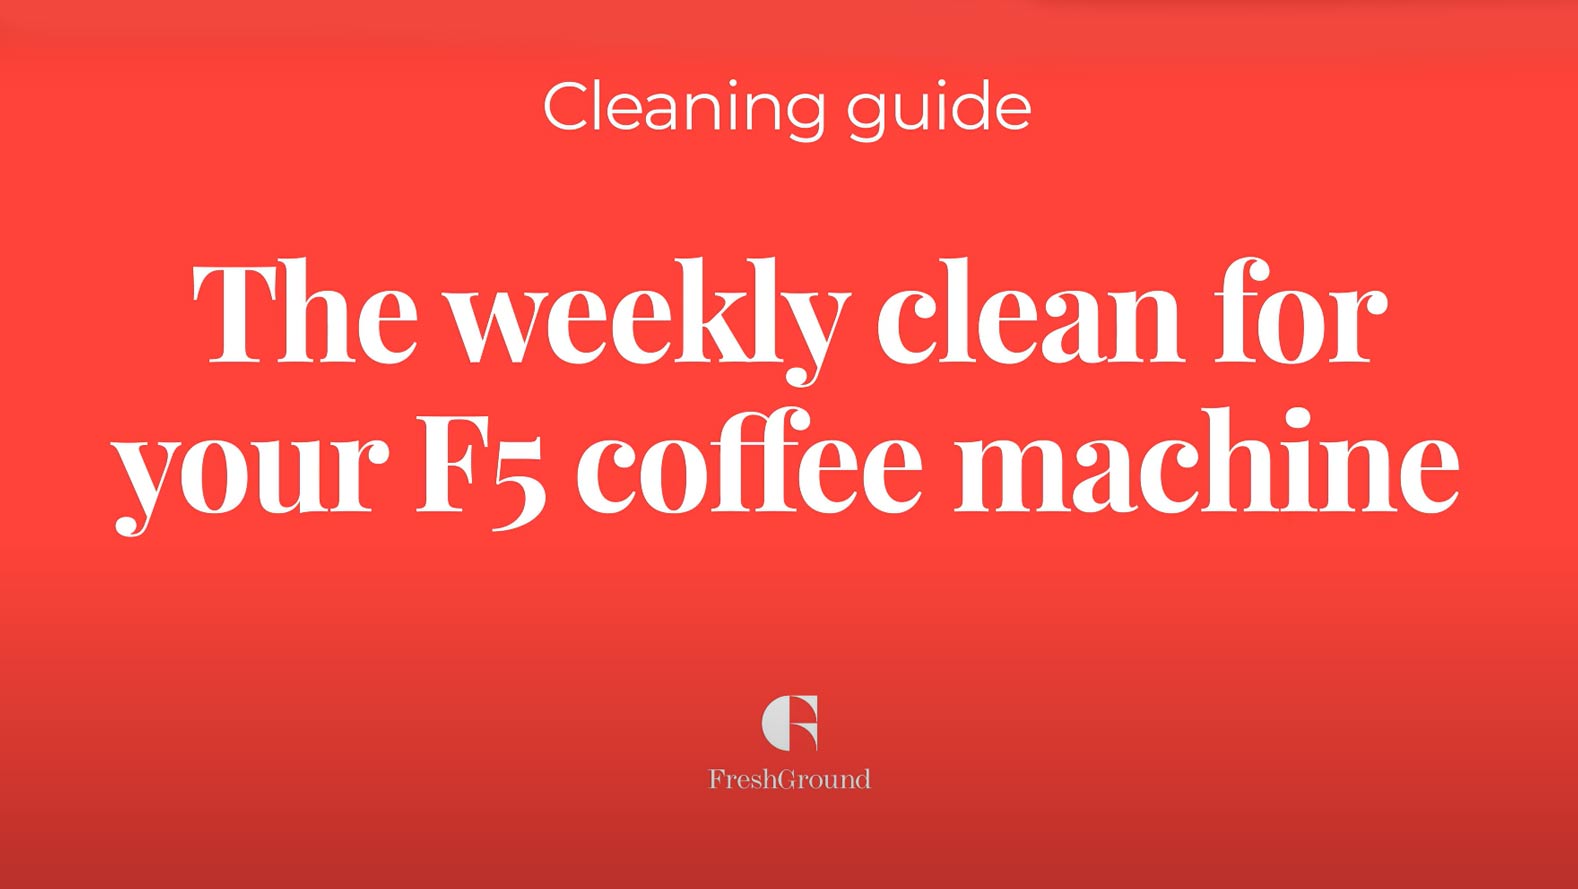 F5 Egro One Weekly Clean